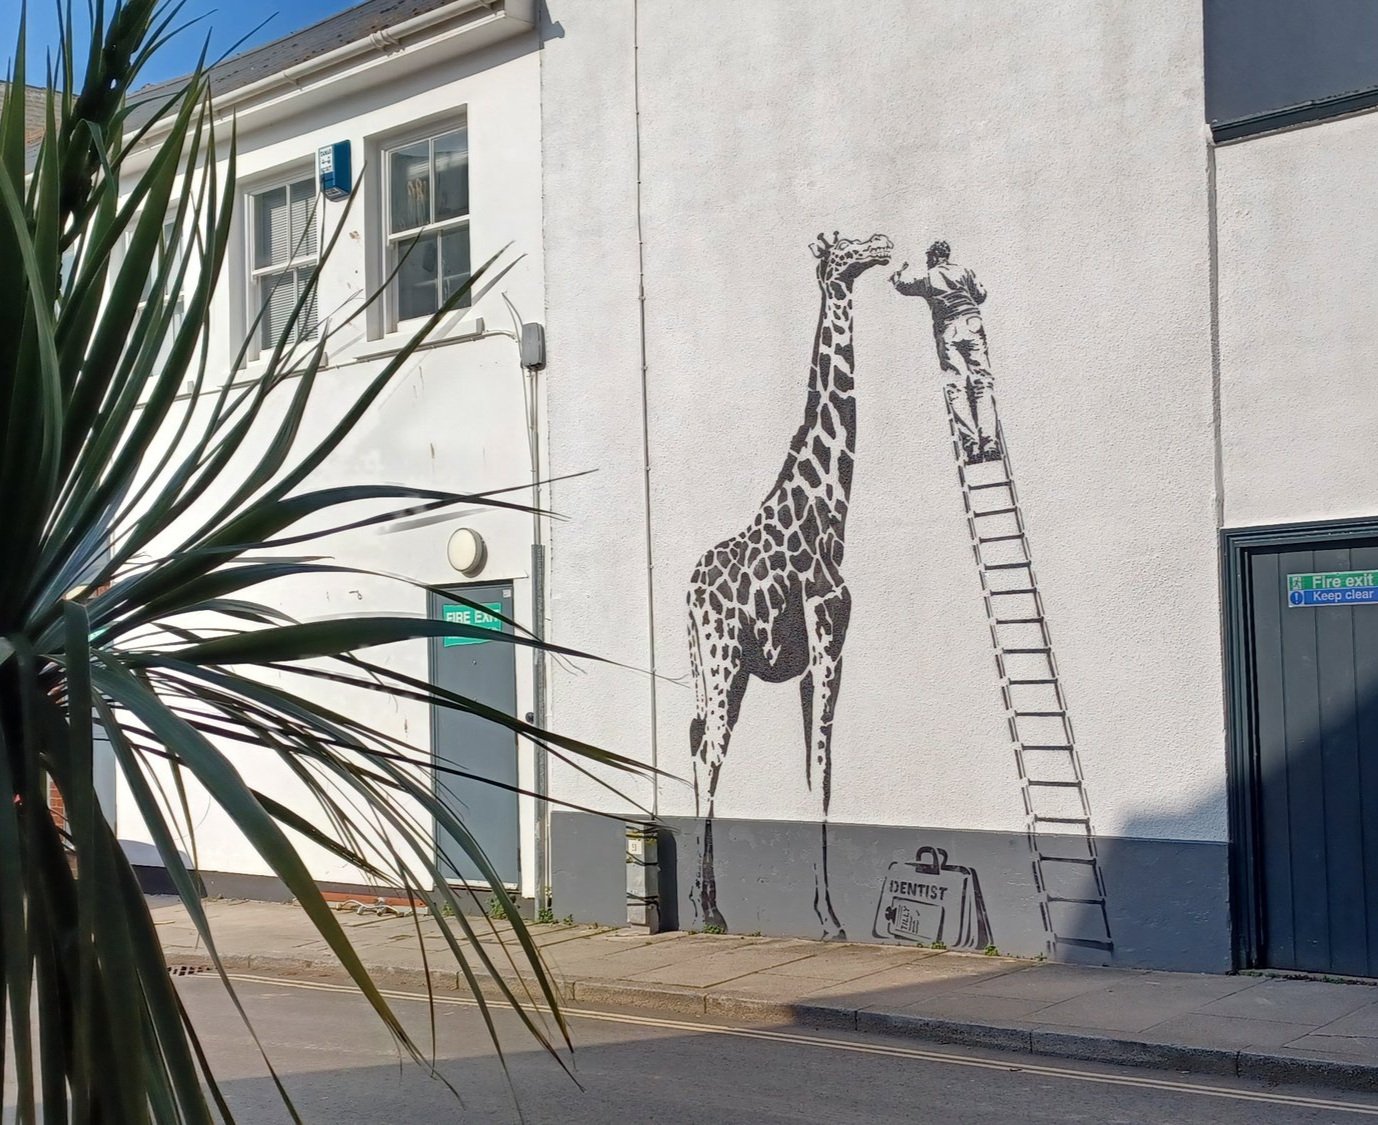 dentist+giraffe+situ.jpg